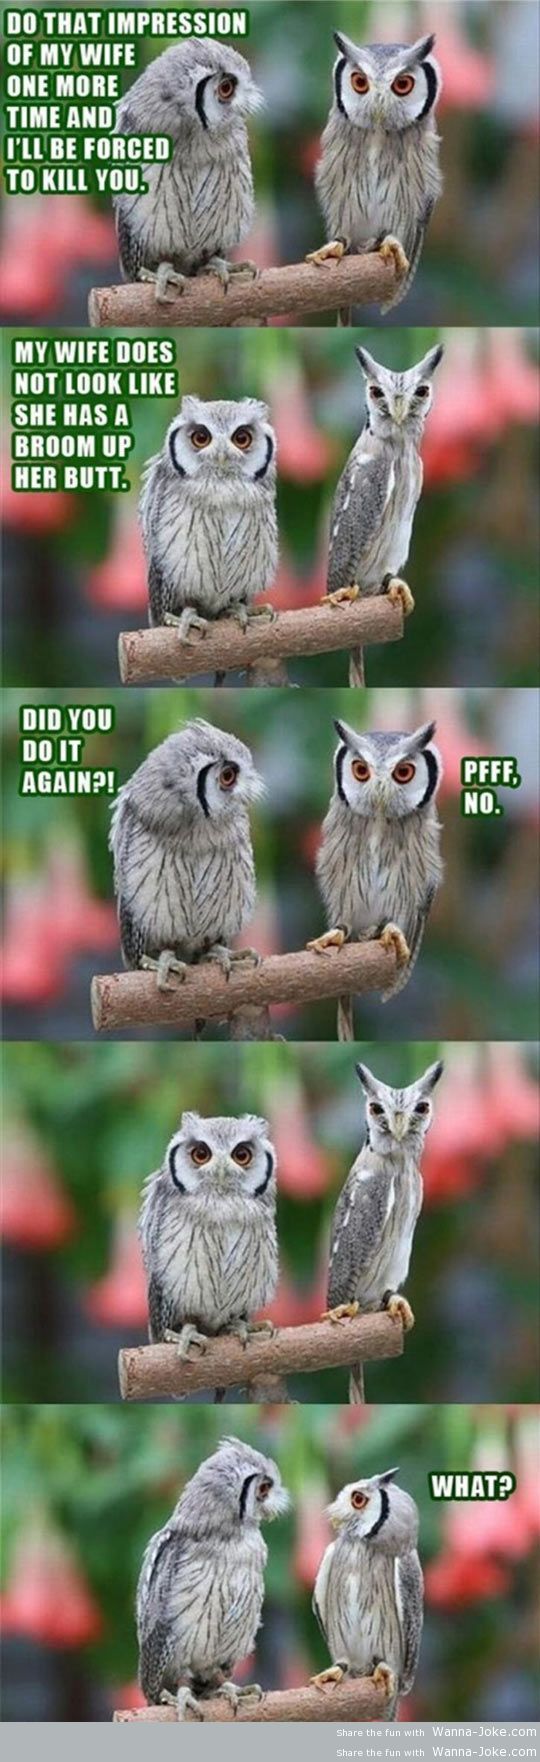 do-it-again-owls